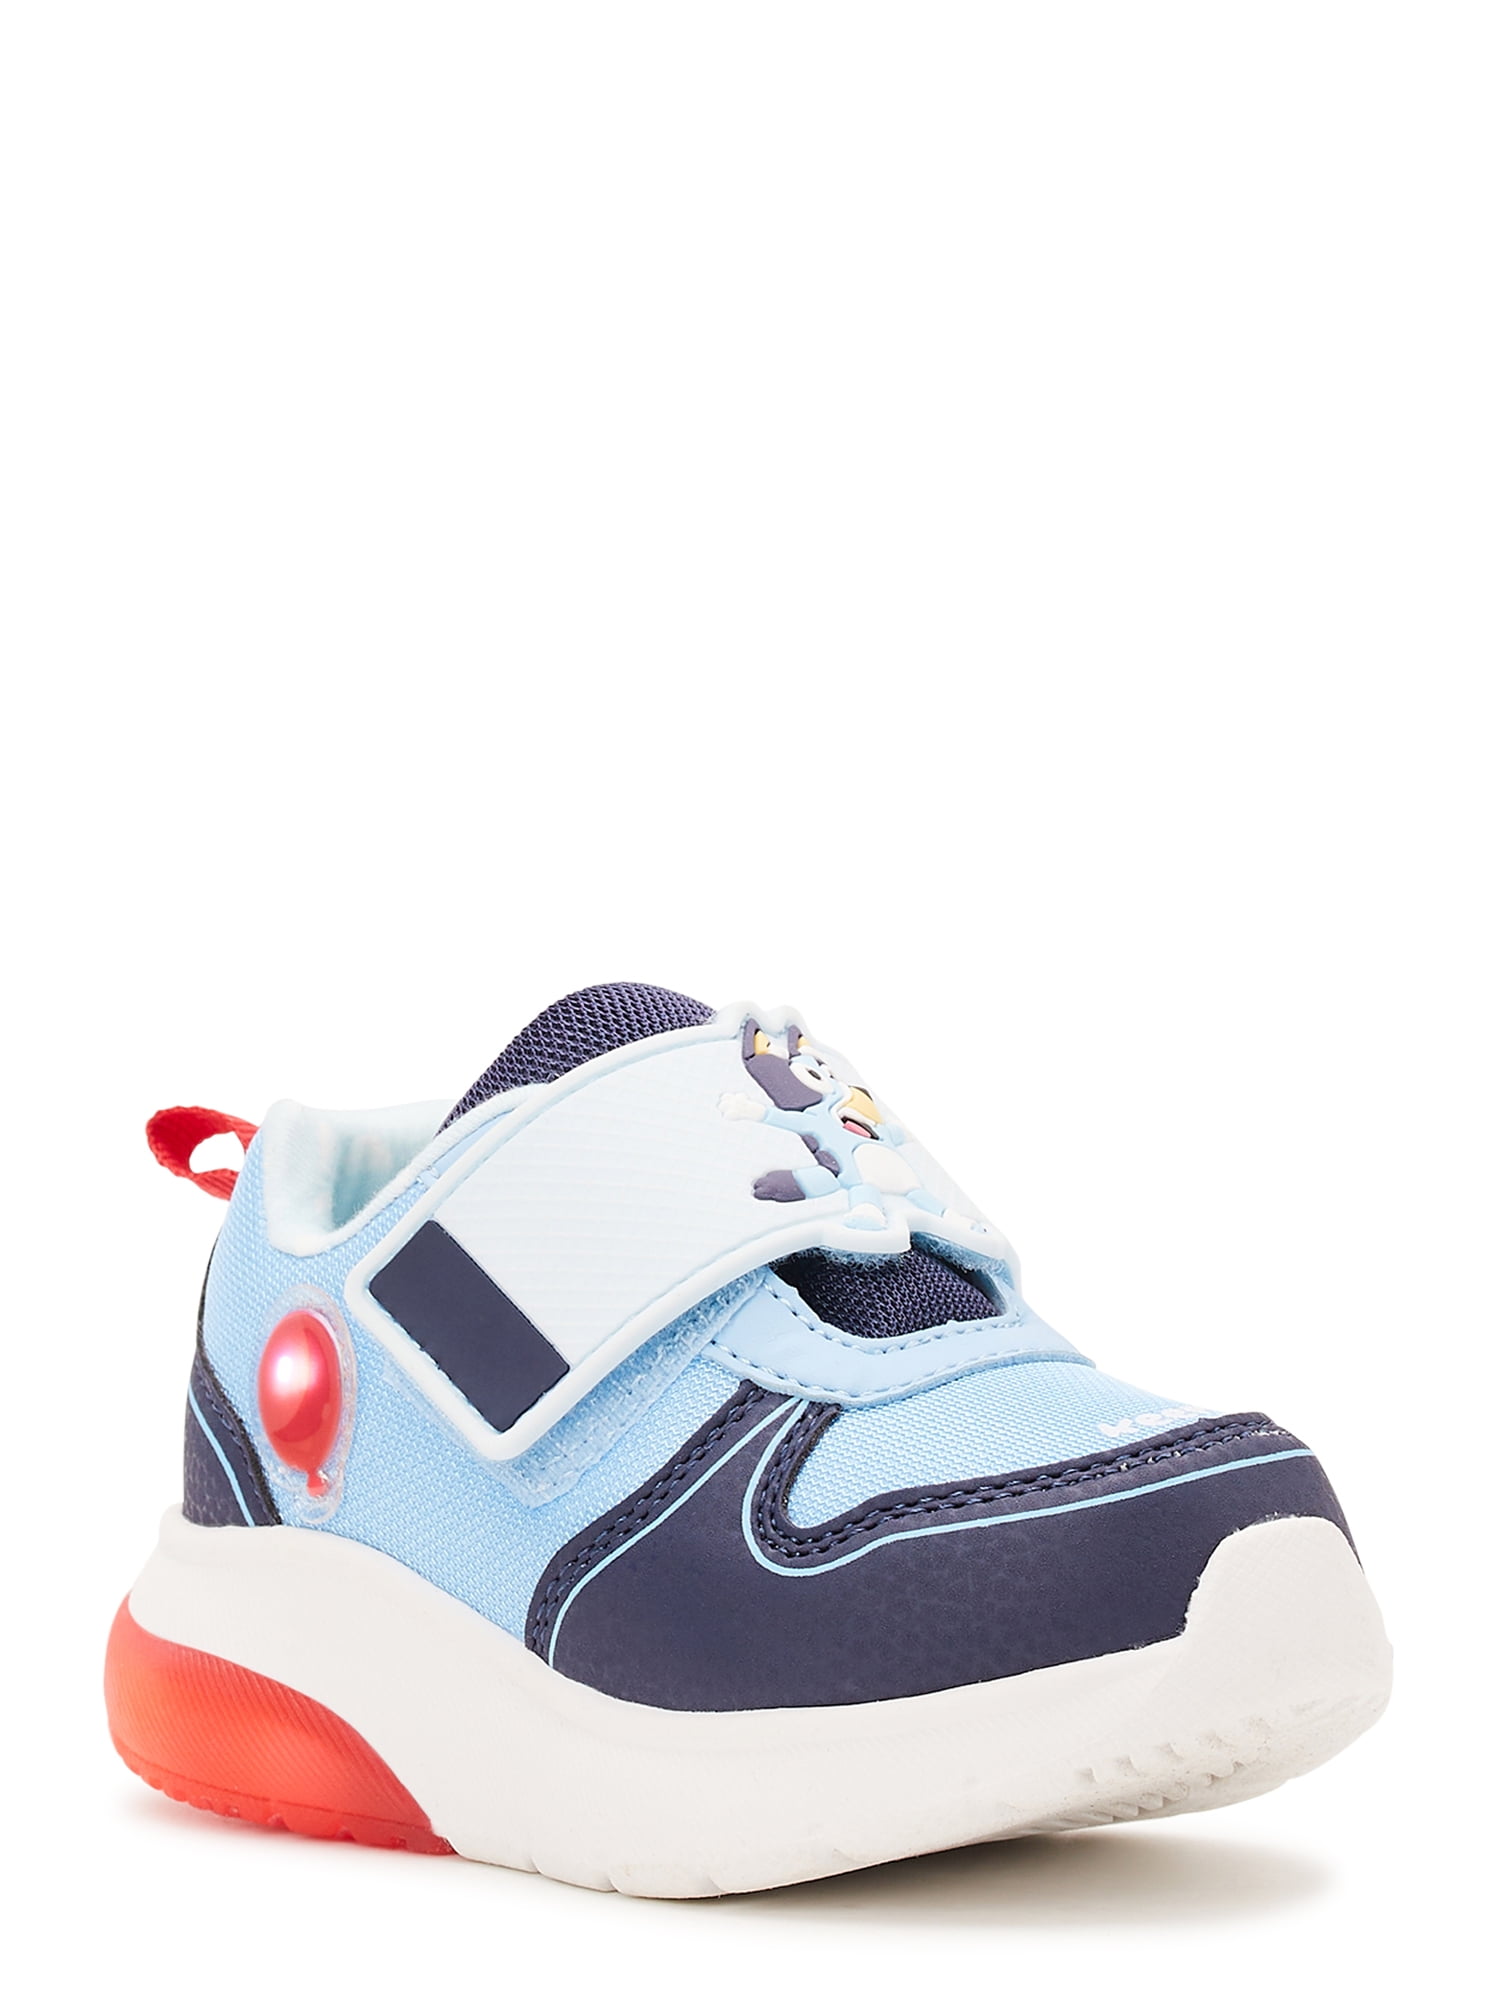 Bluey Toddler Slip-on Sneakers, Sizes 5-12 - Walmart.com